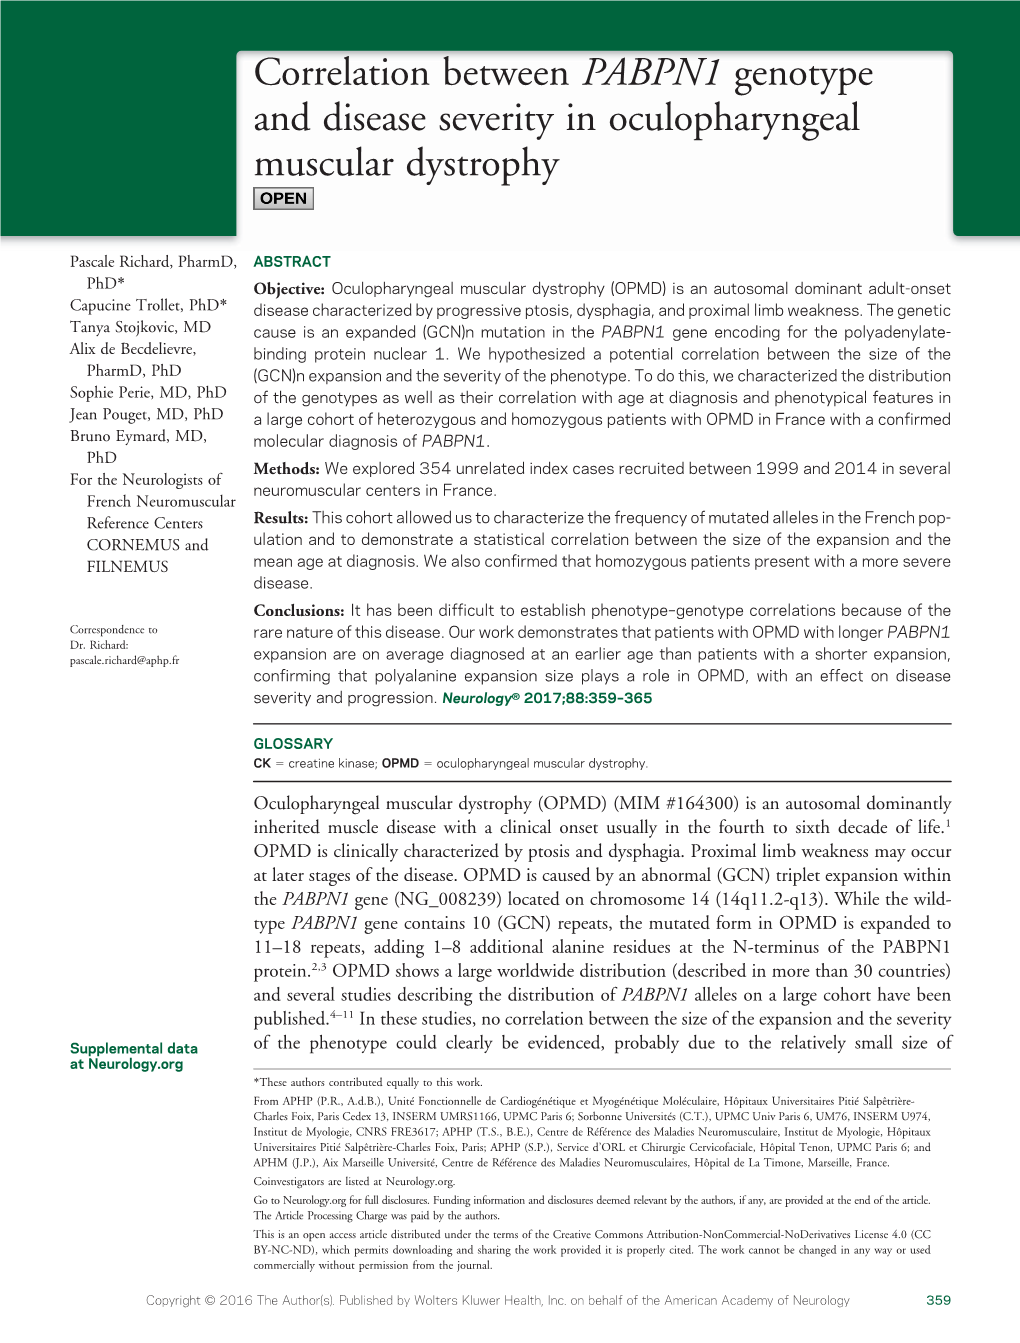 Correlation Between PABPN1 Genotype and Disease Severity in Oculopharyngeal Muscular Dystrophy